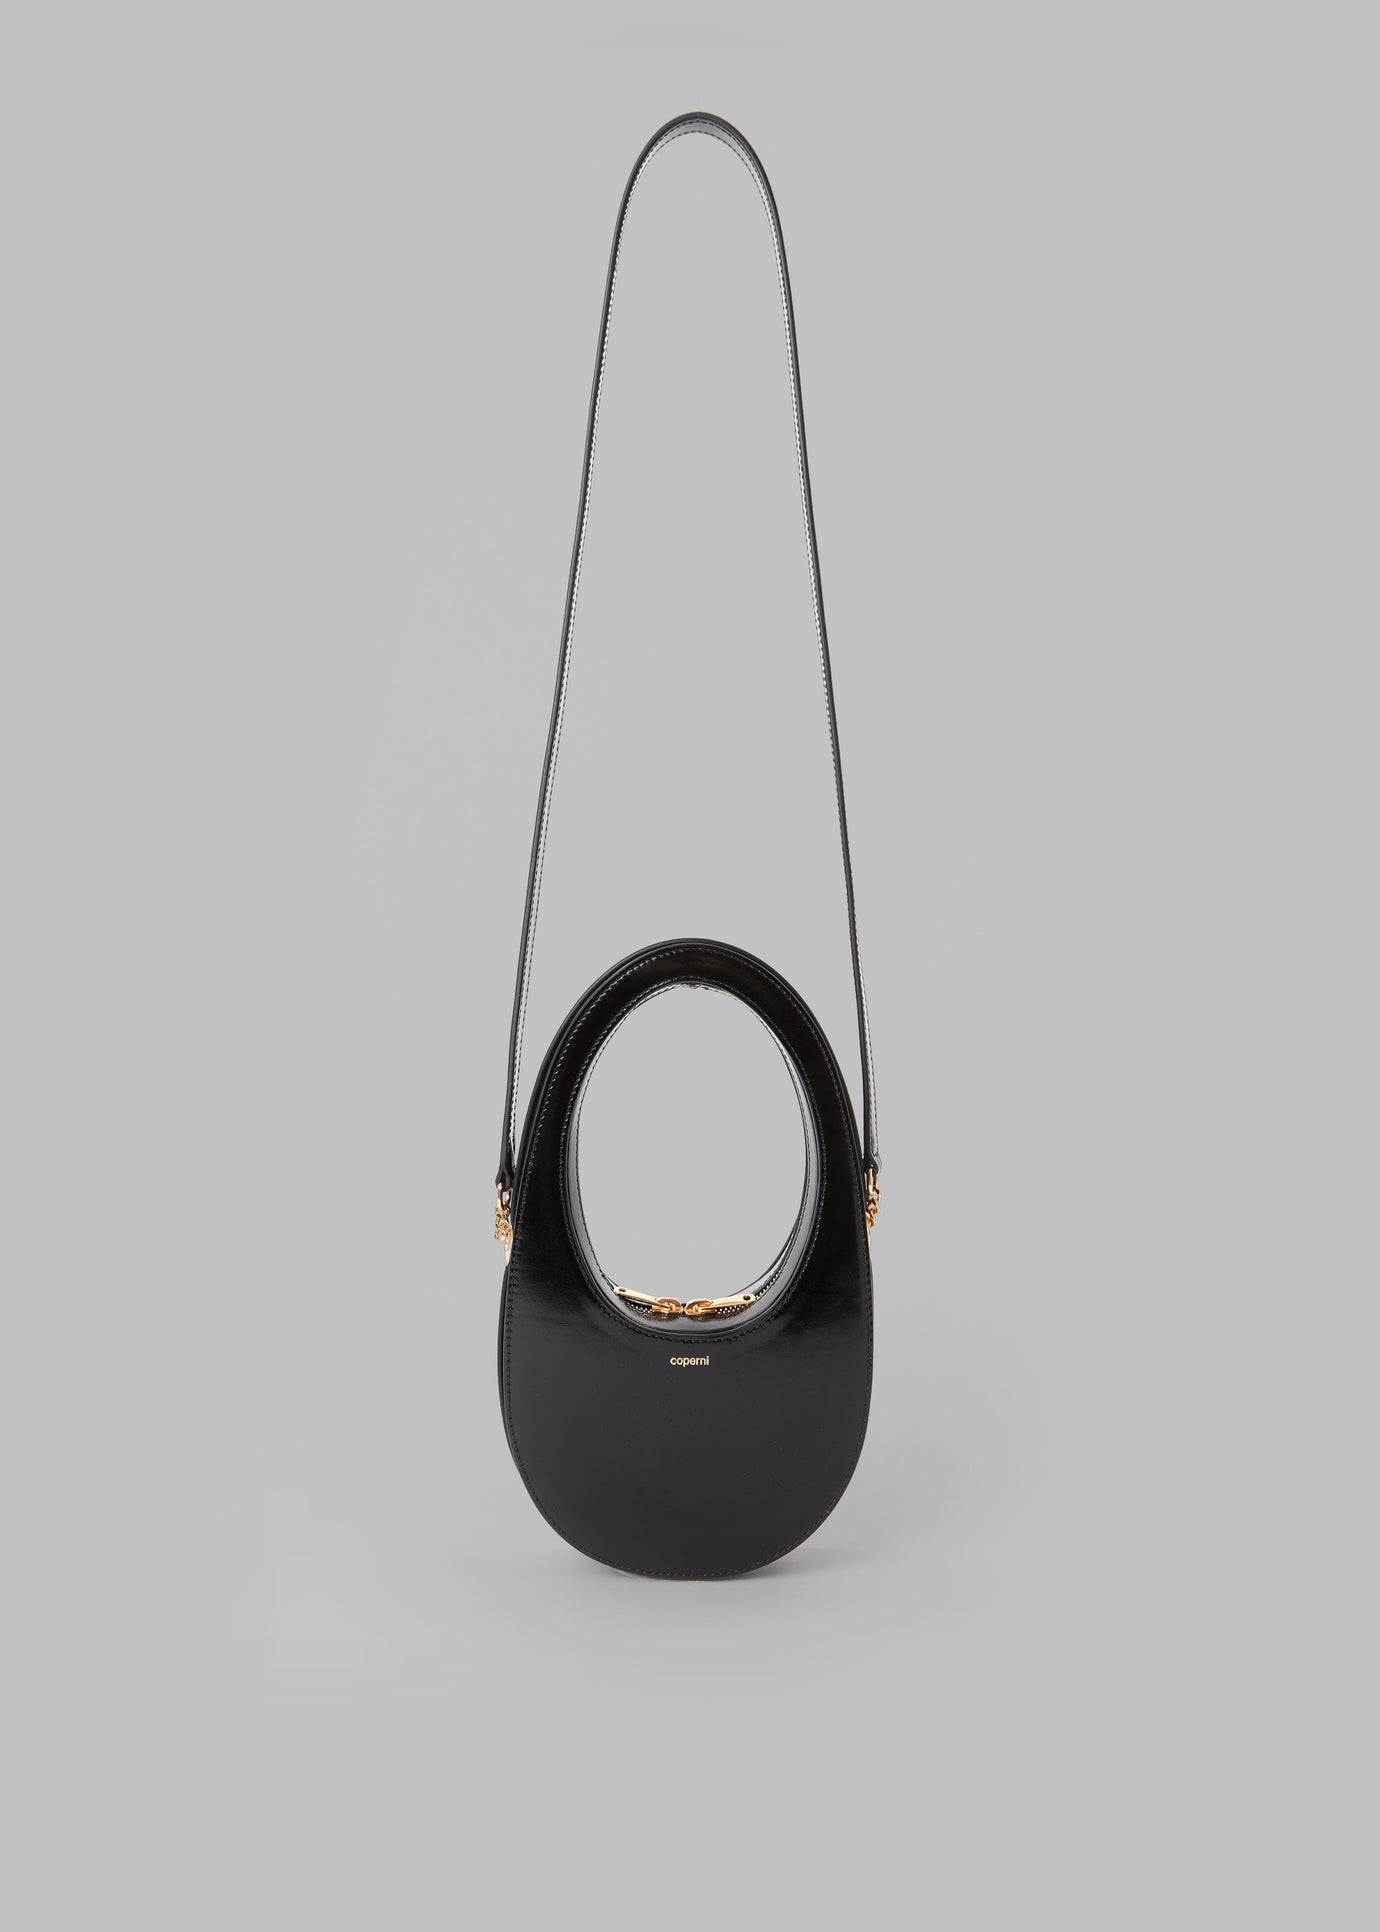 Coperni Crossbody Mini Swipe Bag - Black/Gold